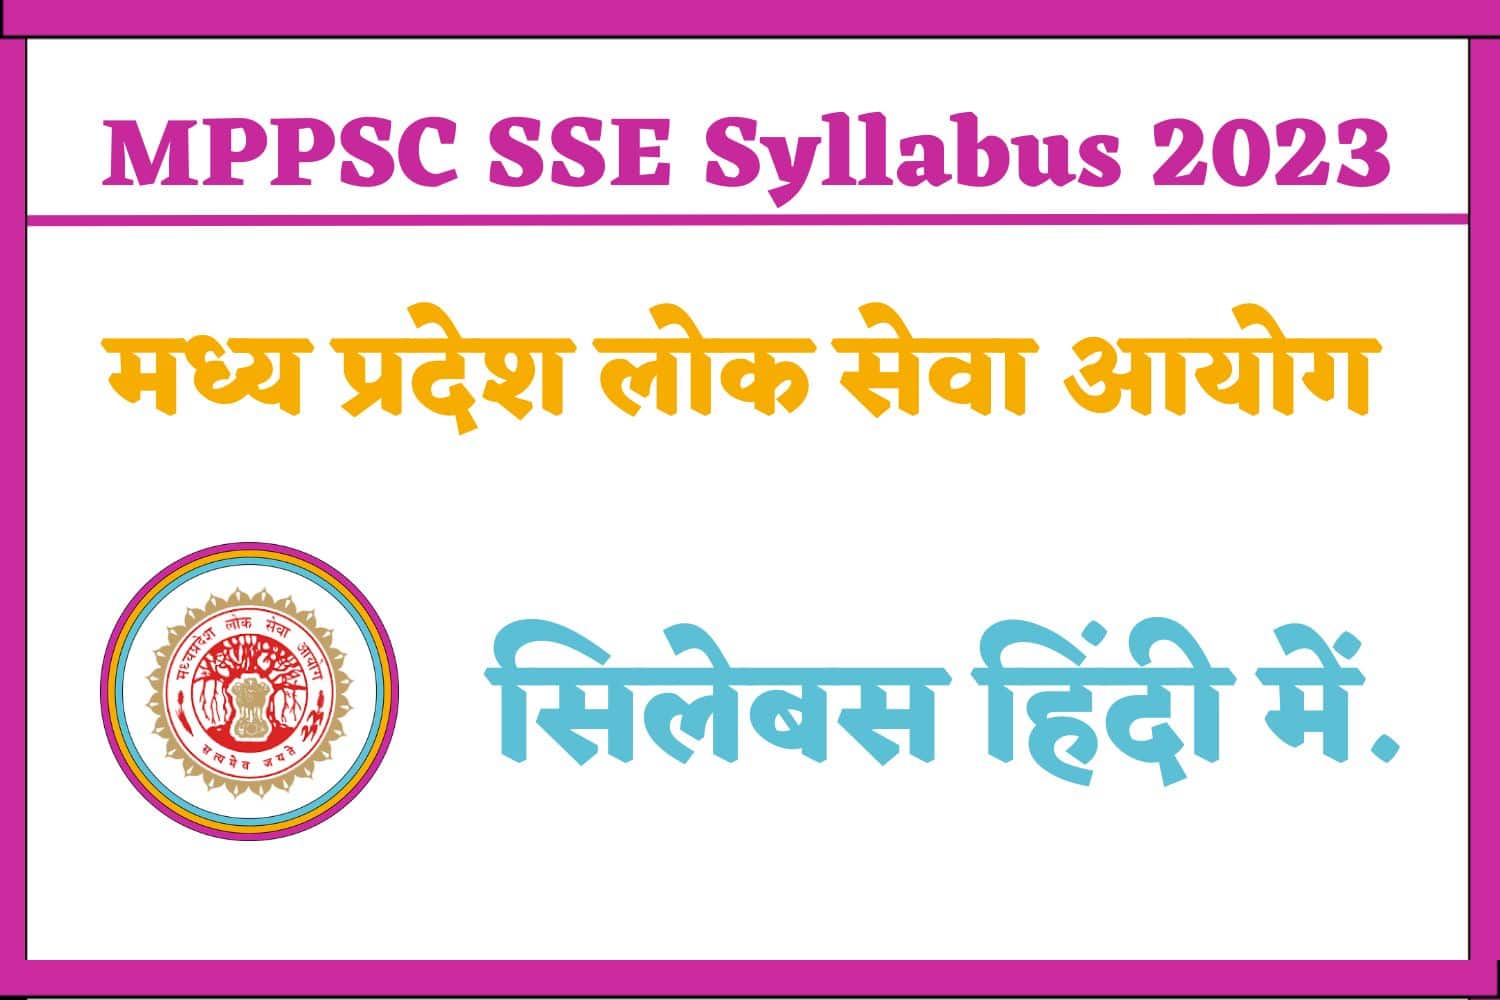 MPPSC SSE Syllabus 2023 in Hindi | मध्य प्रदेश लोक सेवा आयोग सिलेबस